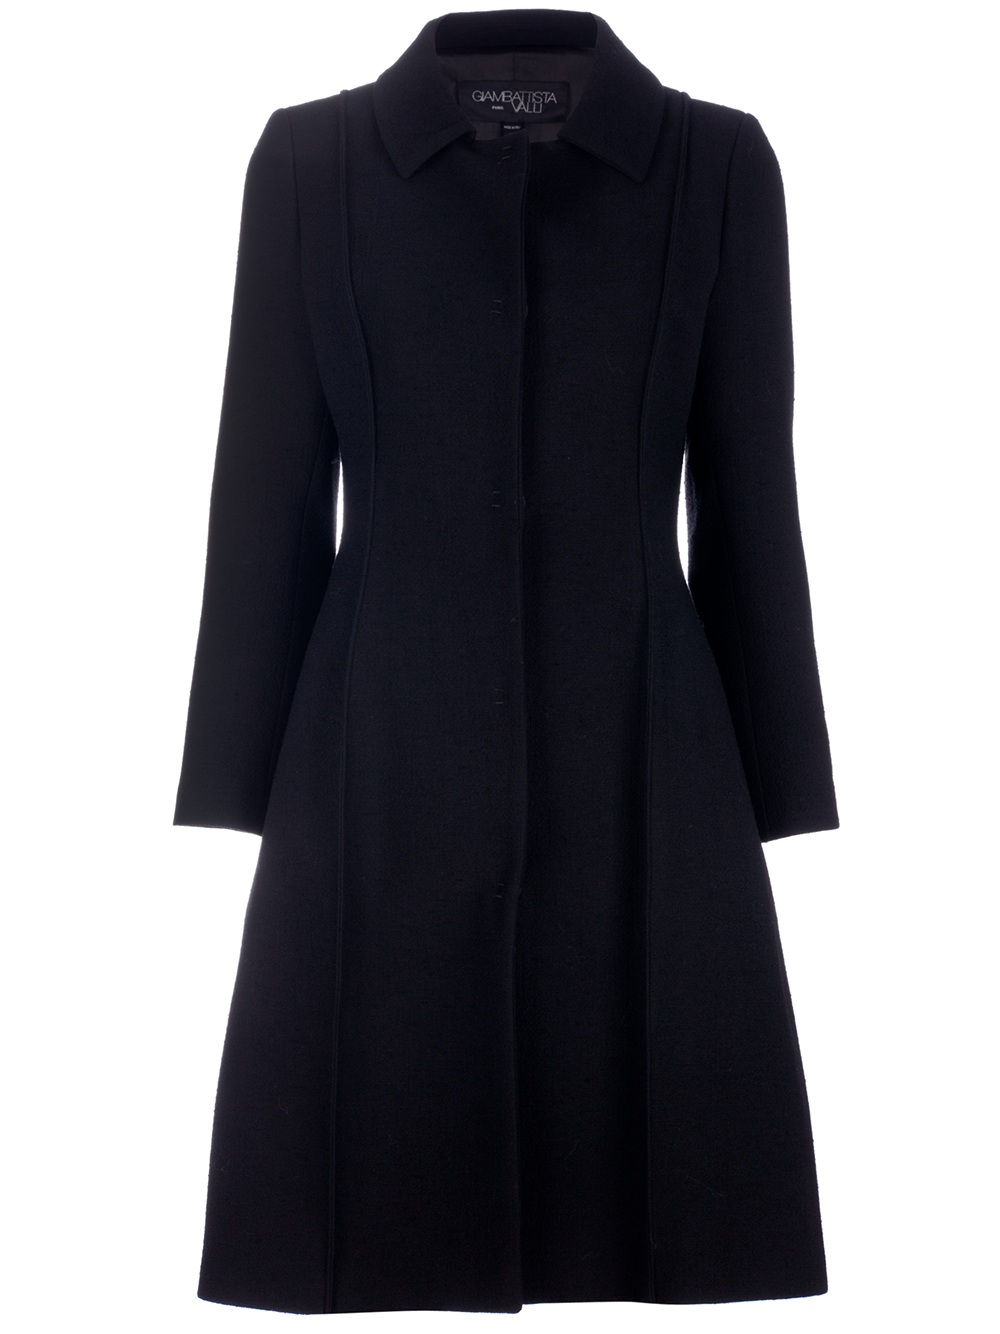 Giambattista valli Flared Skirt Coat in Black | Lyst